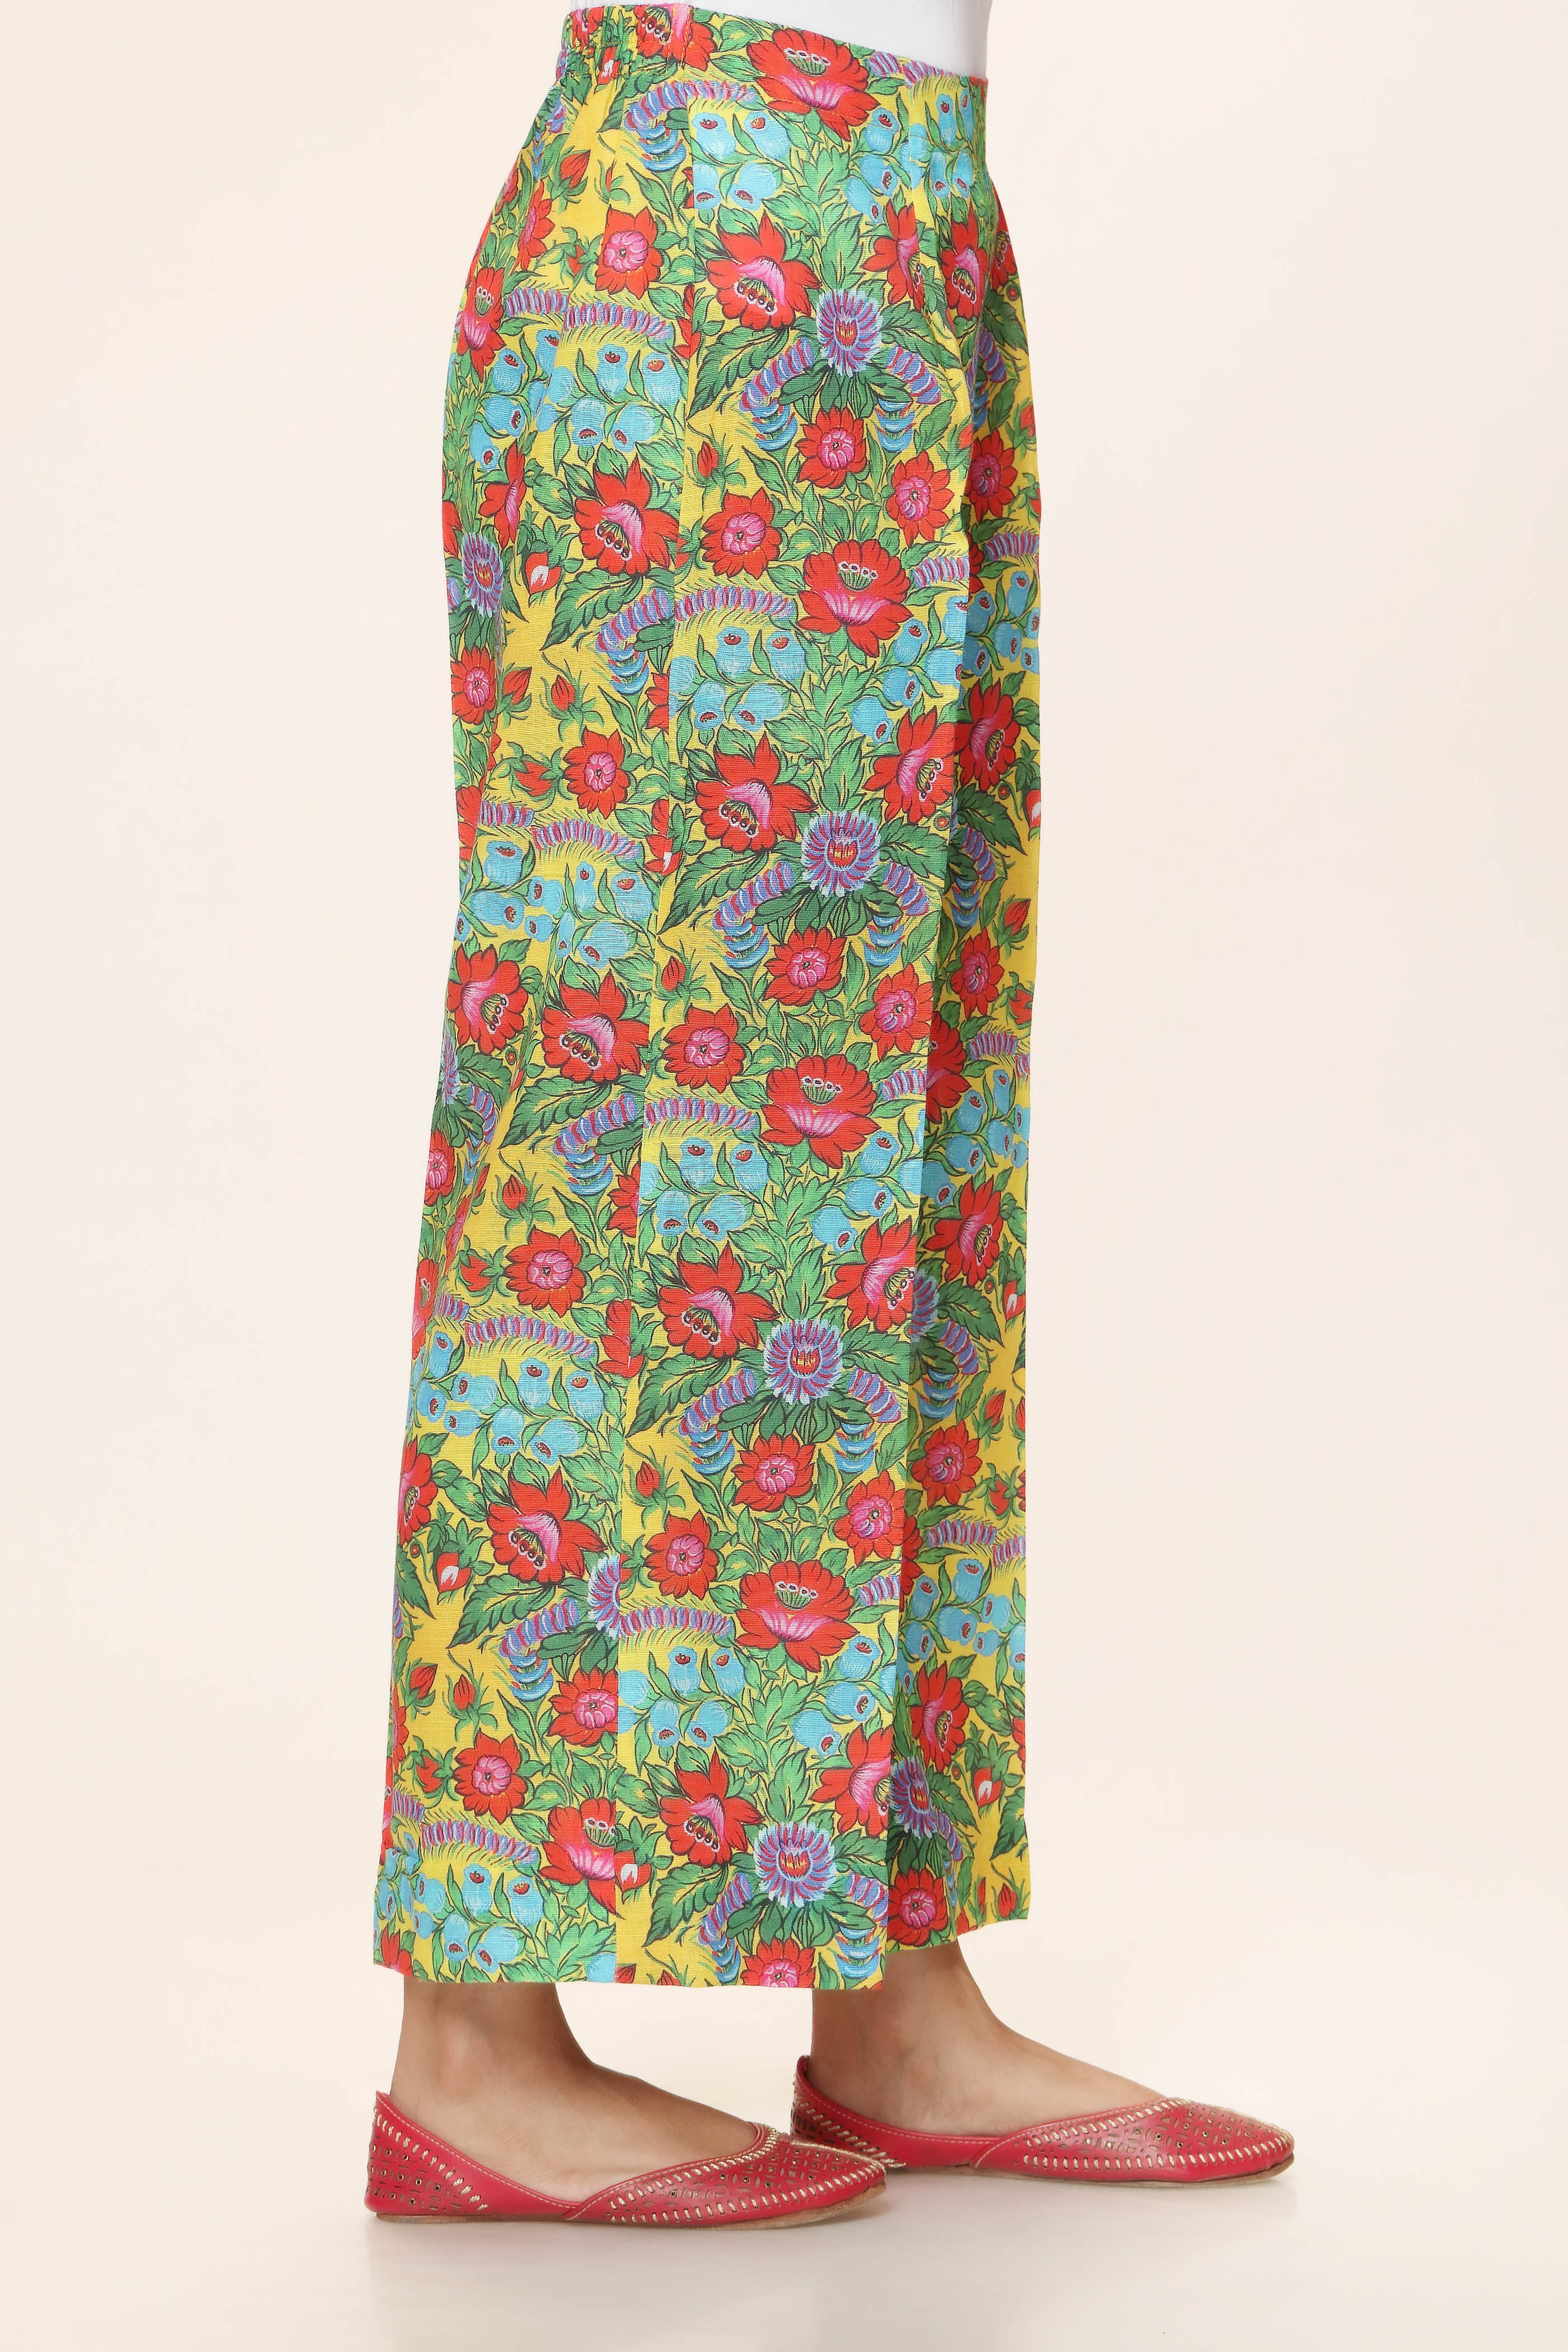 Chain Stitch Flower Coordinate in Multi coloured Slub Khaddar fabric 3